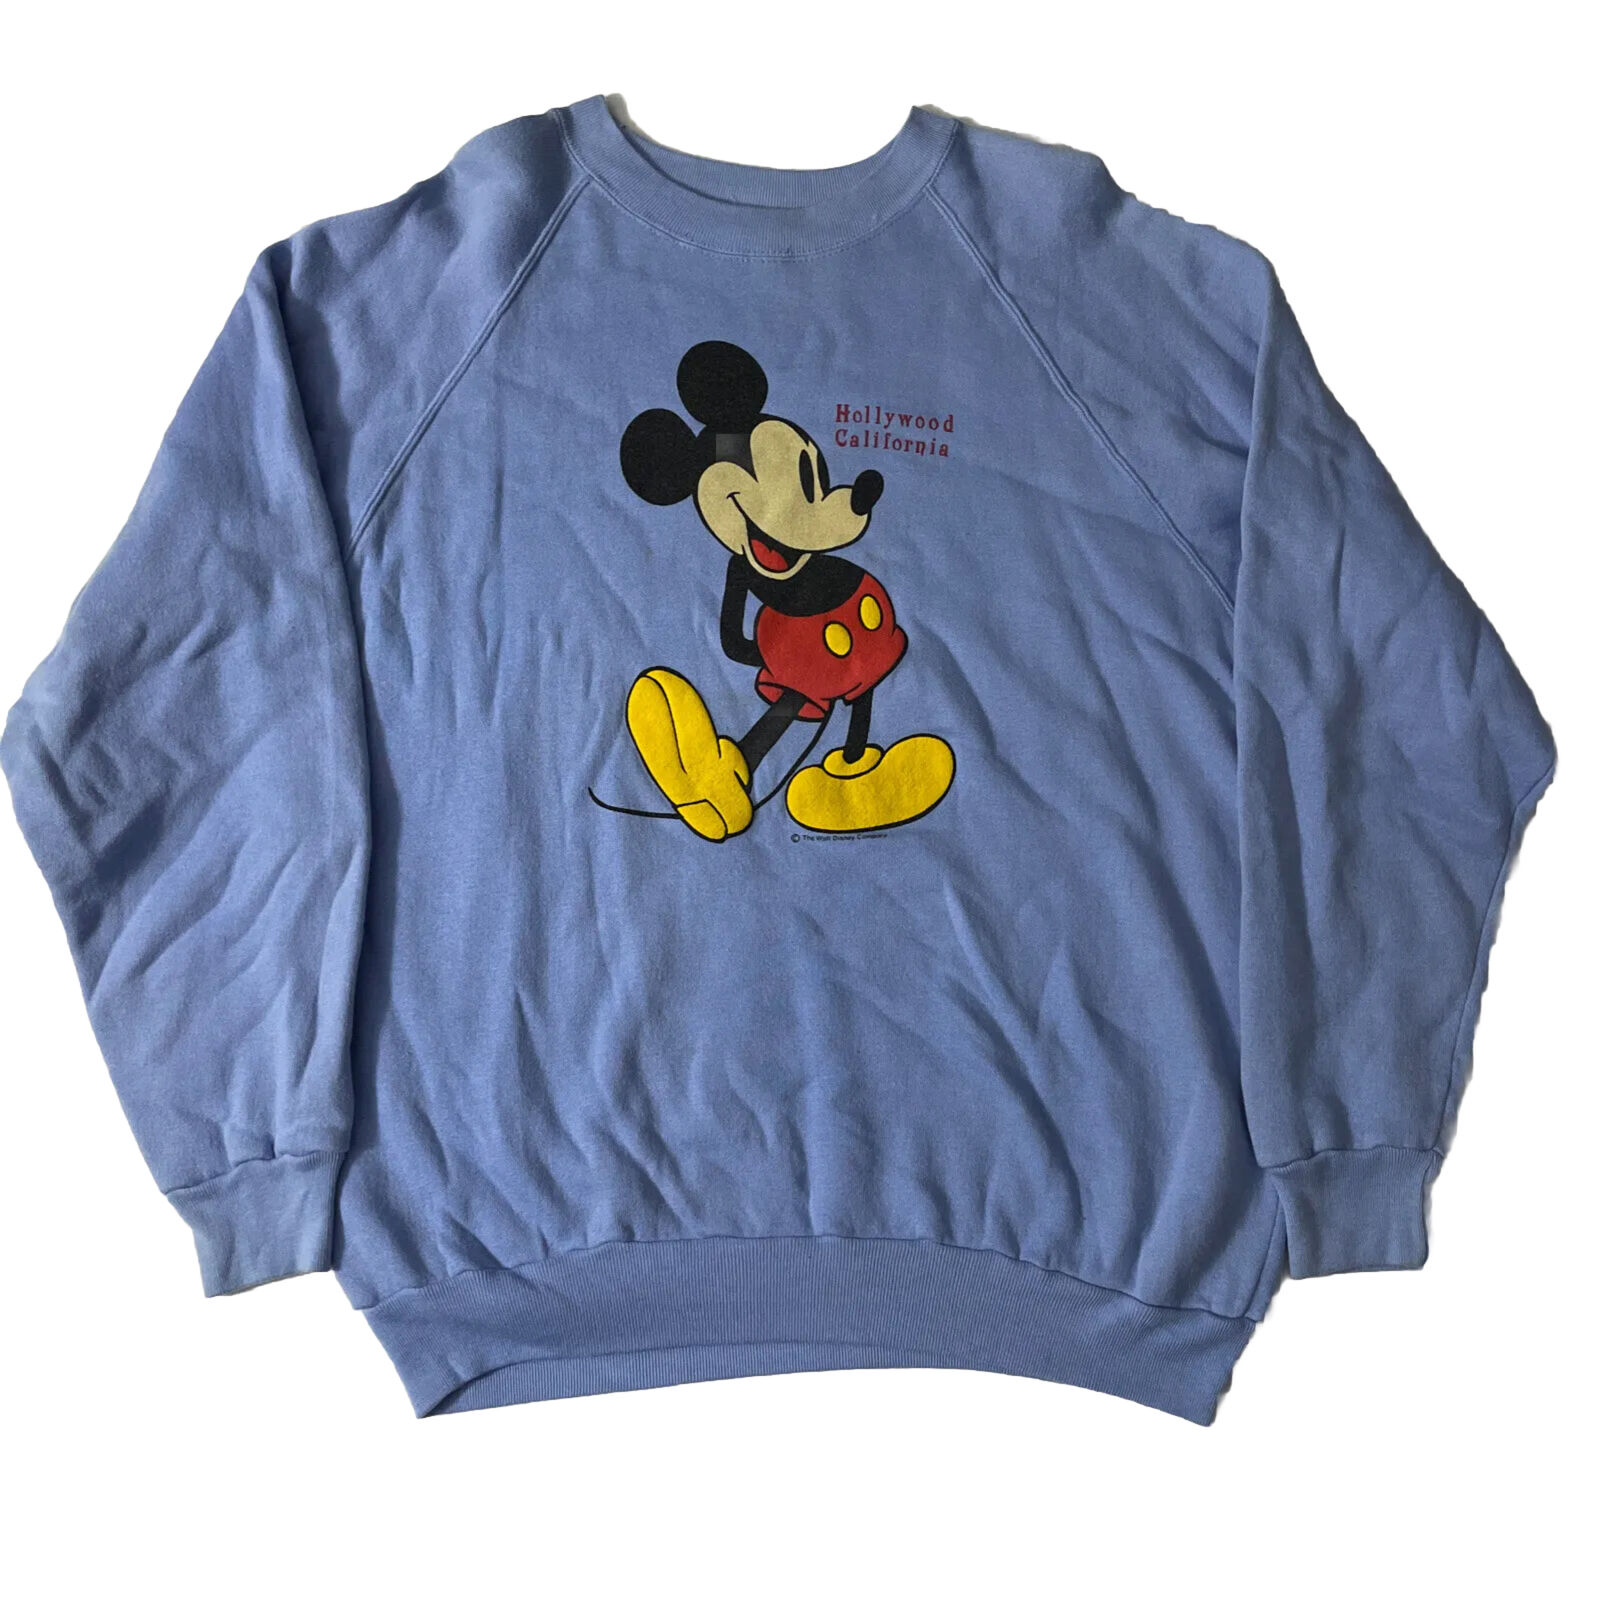 Vintage 80s Mickey Mouse Sweater Sweatshirt Disney Hollywood California Size XL